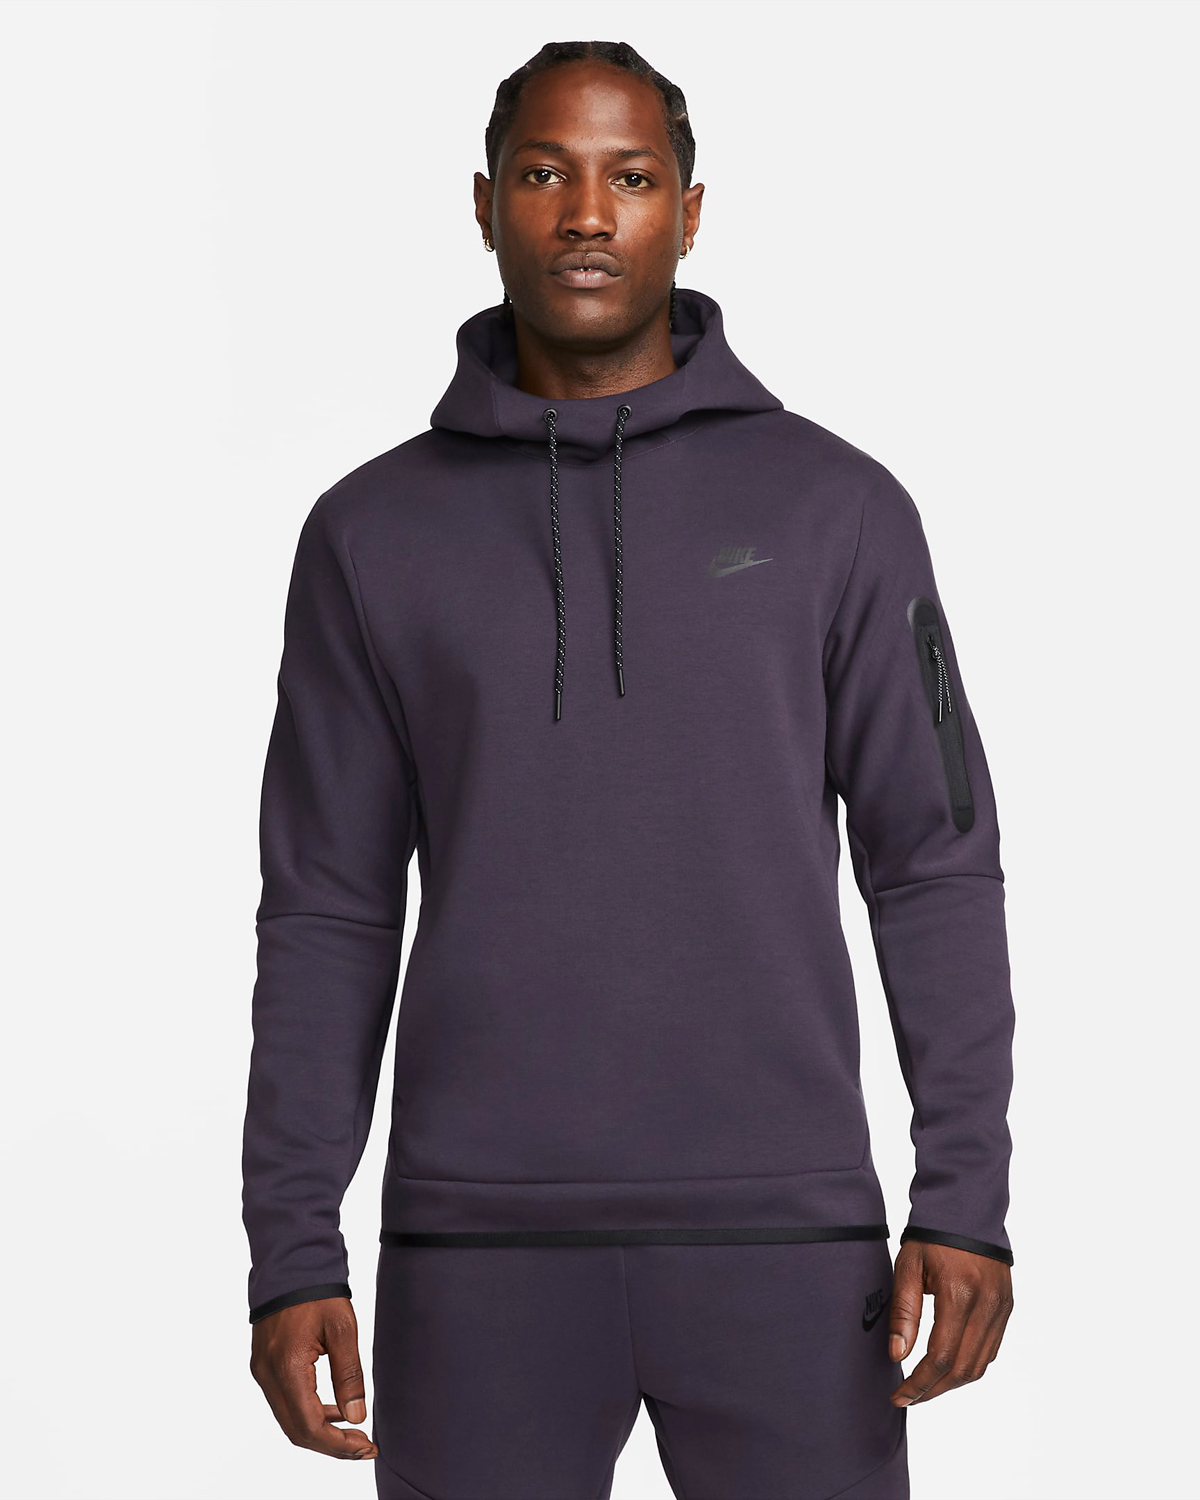 Nike-Tech-Fleece-Pullover-Hoodie-Cave-Purple